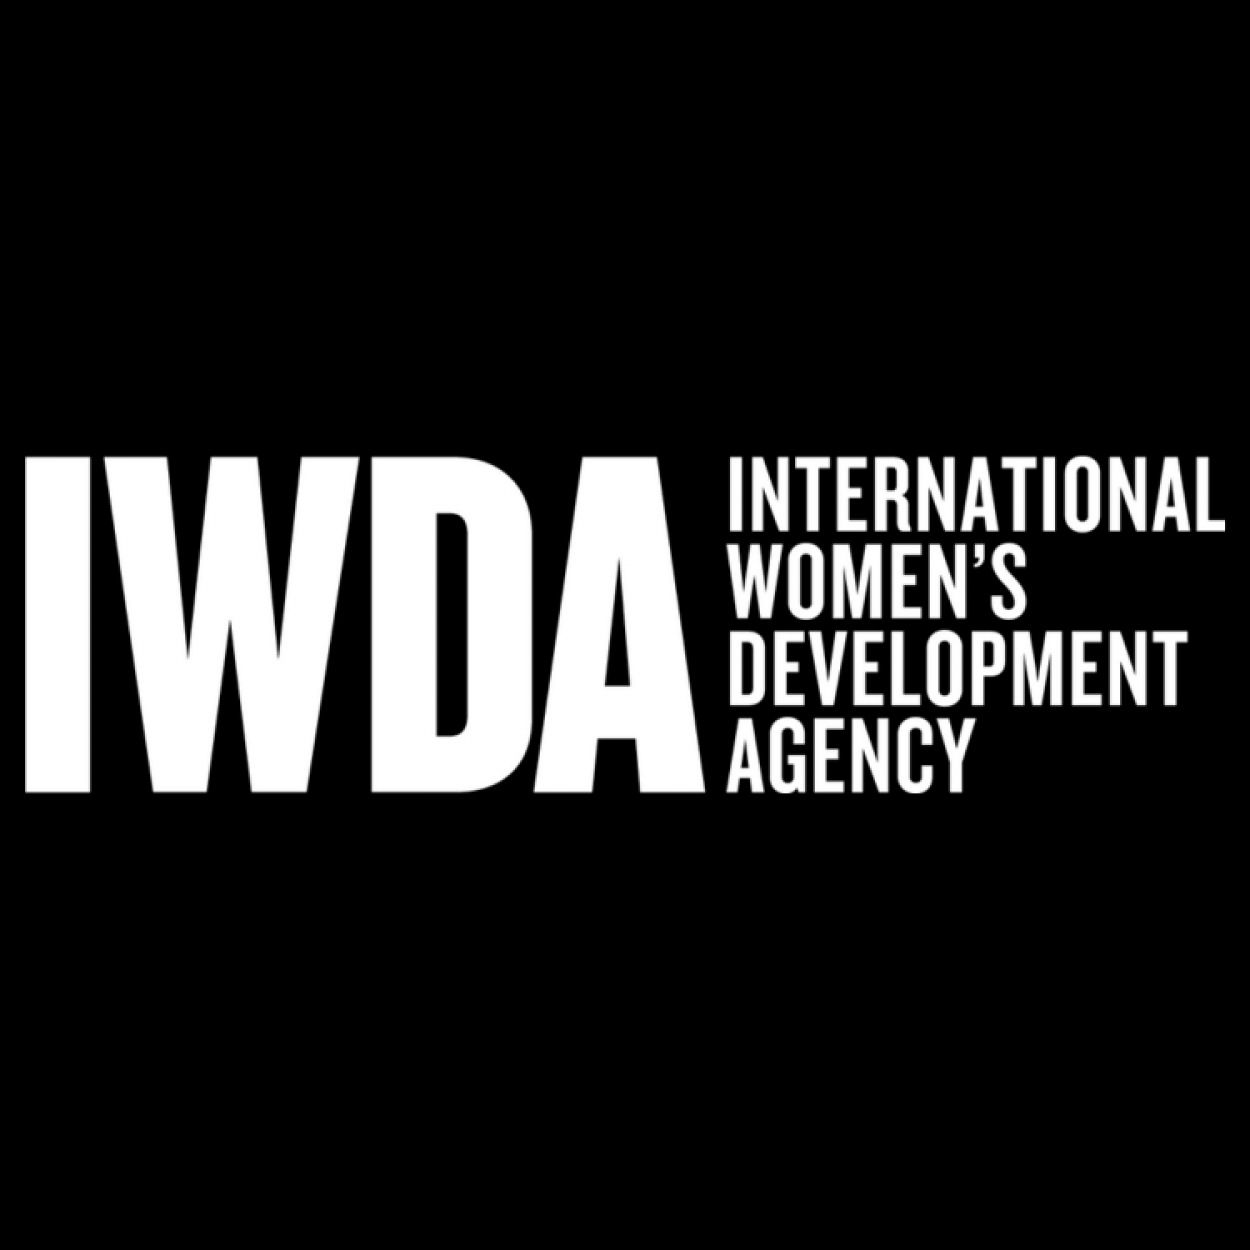 Black background with IWDA International Womens Development Agency in white text